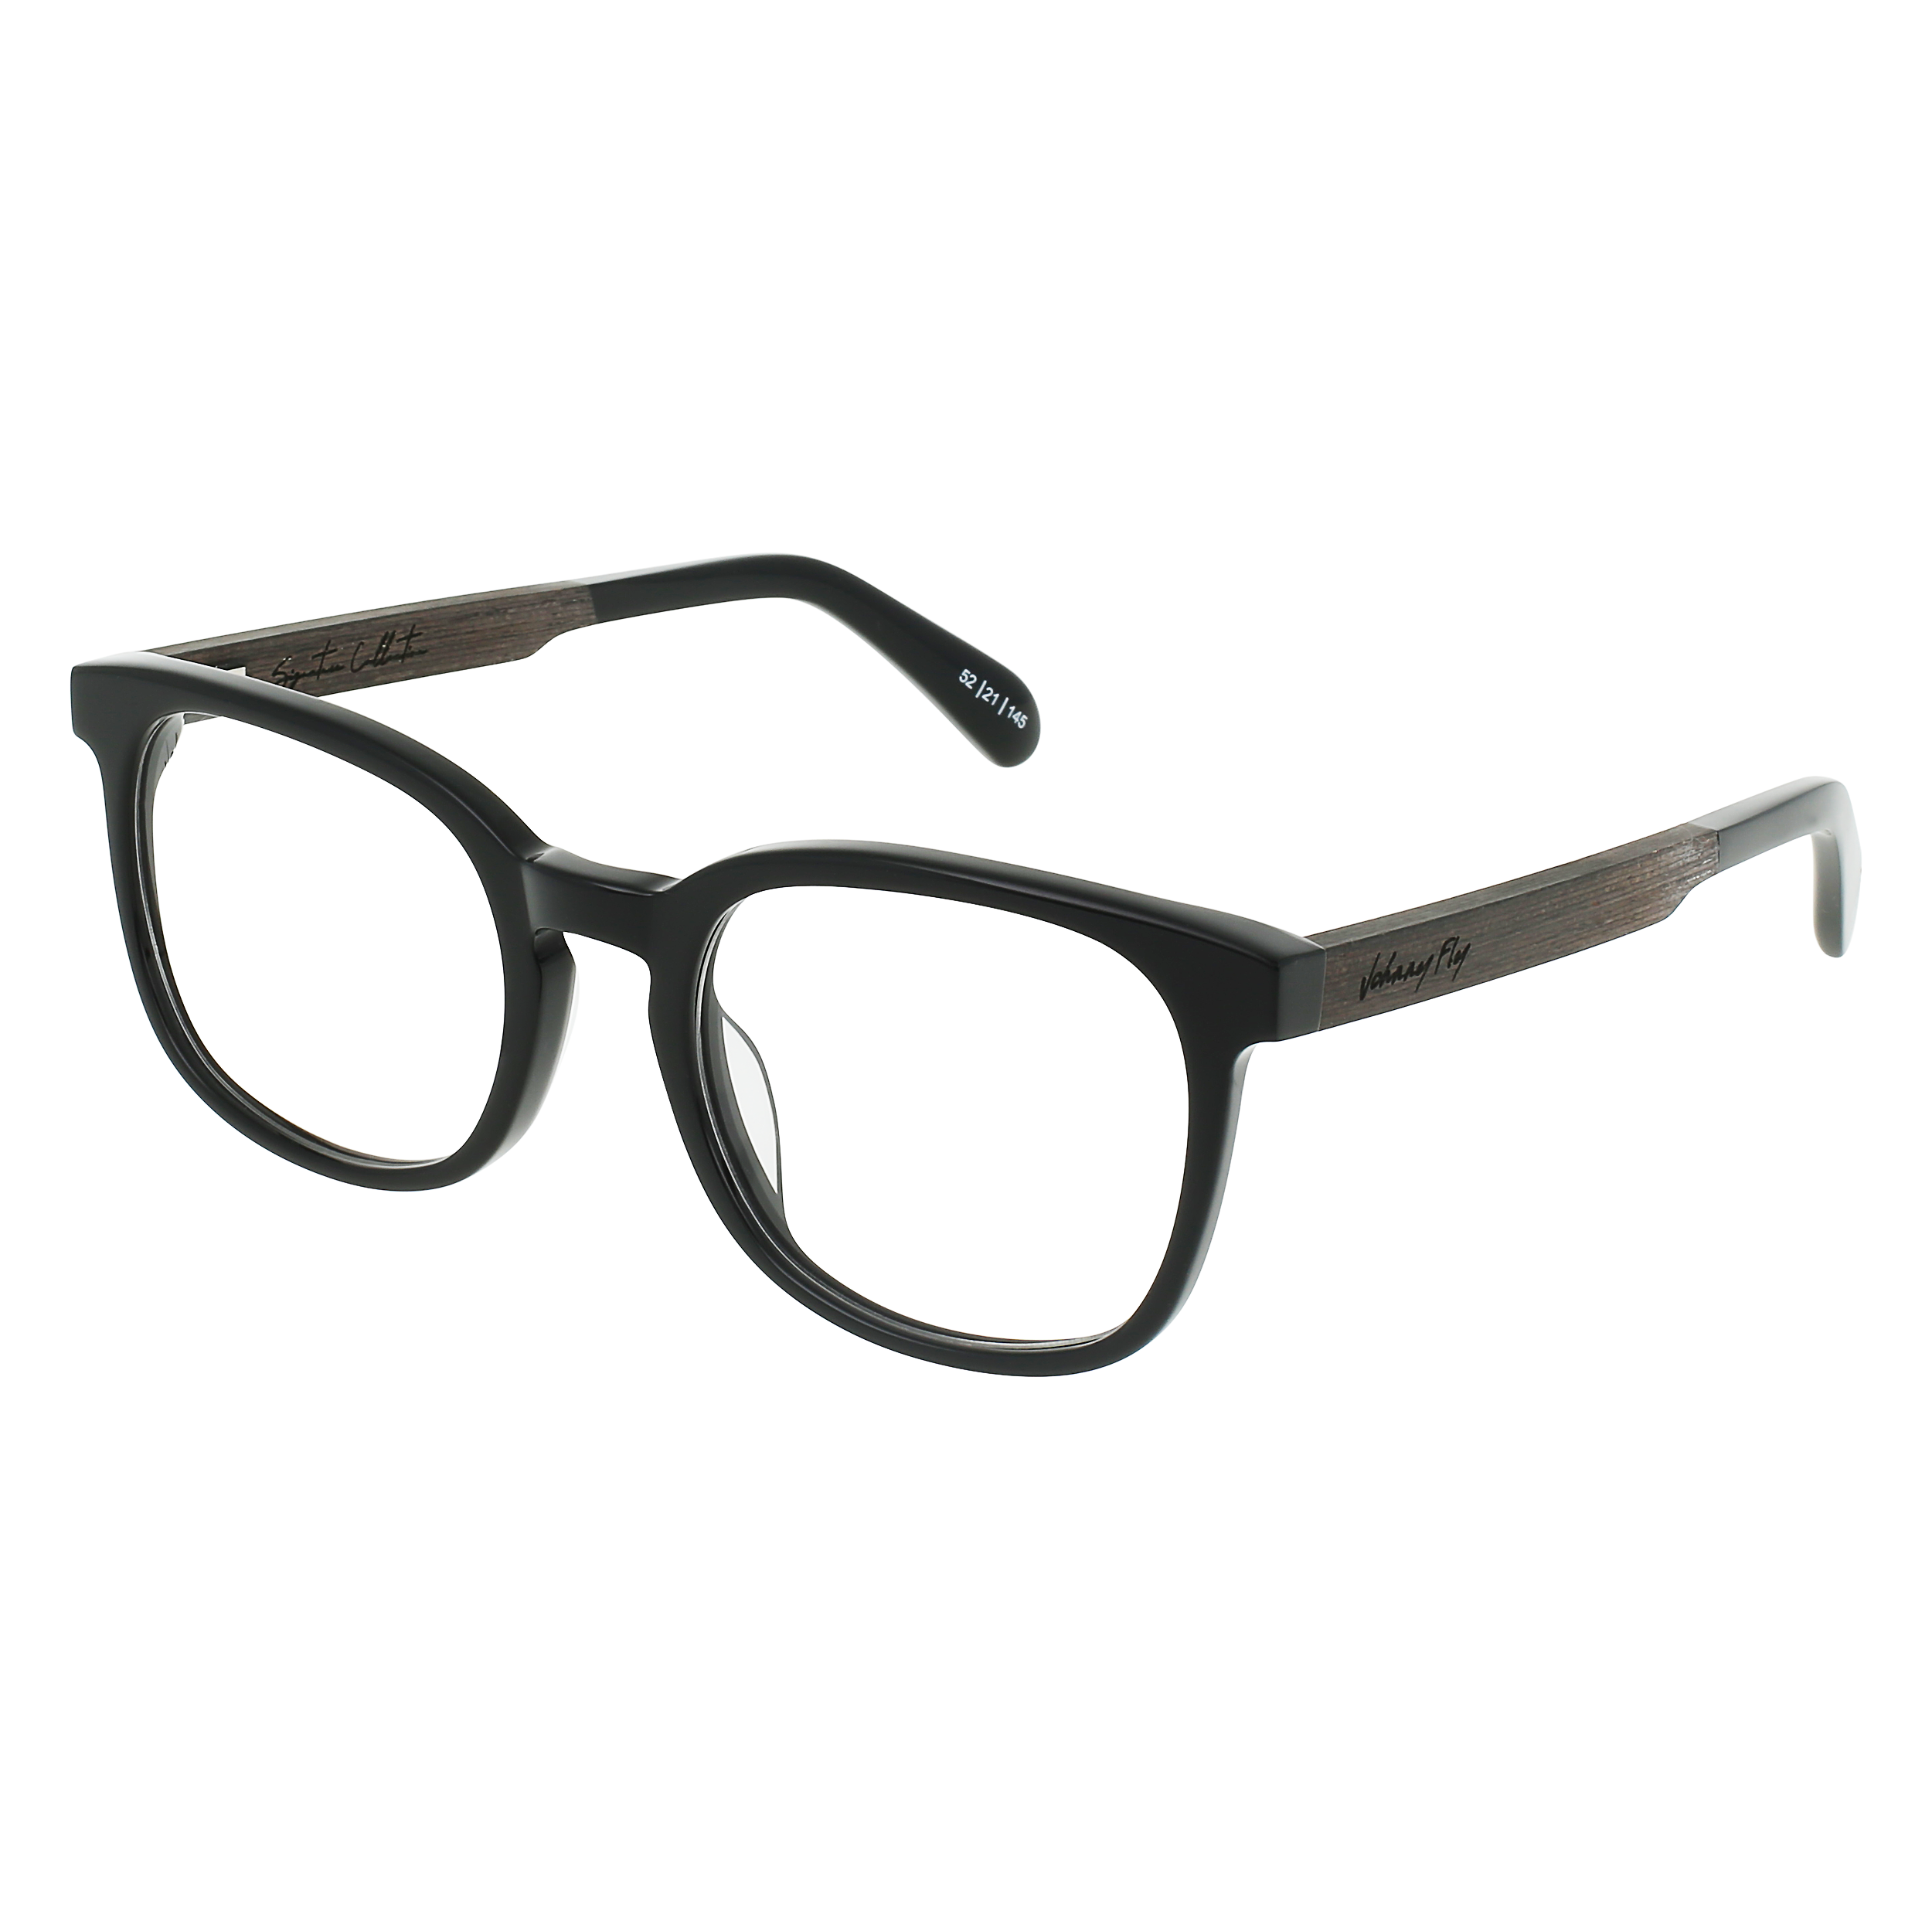 ALTITUDE BLUGARD - Gloss Black - Blue Light Glasses - Johnny Fly Eyewear 